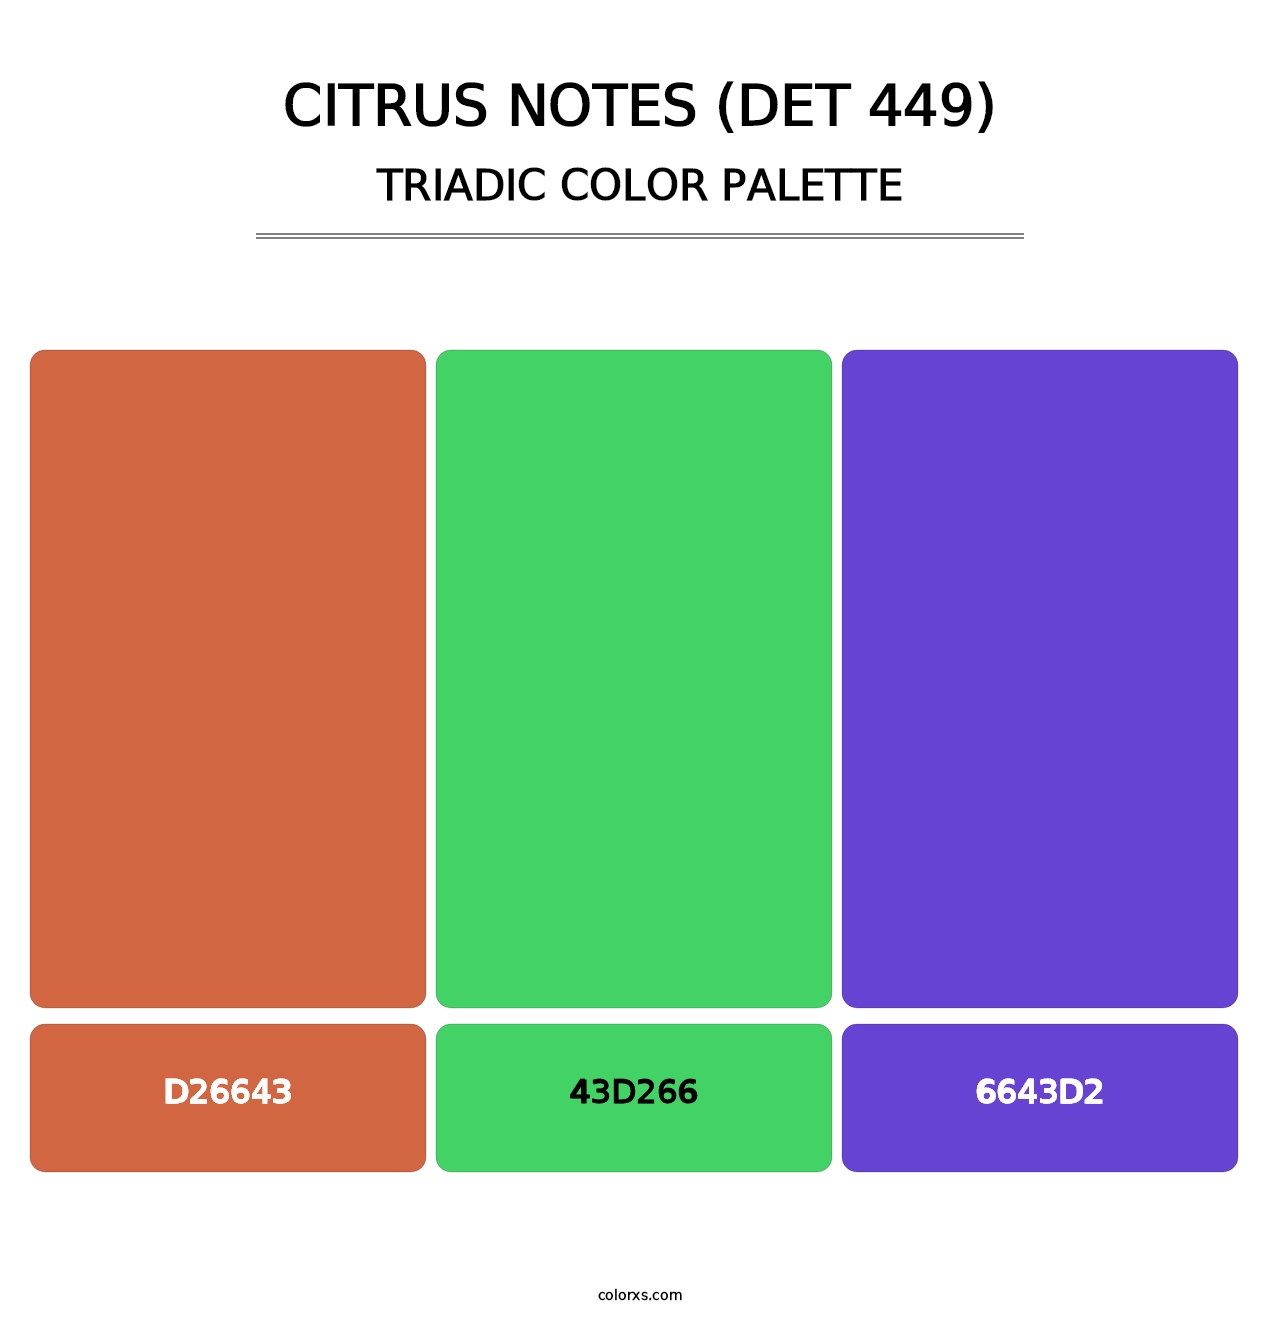 Citrus Notes (DET 449) - Triadic Color Palette